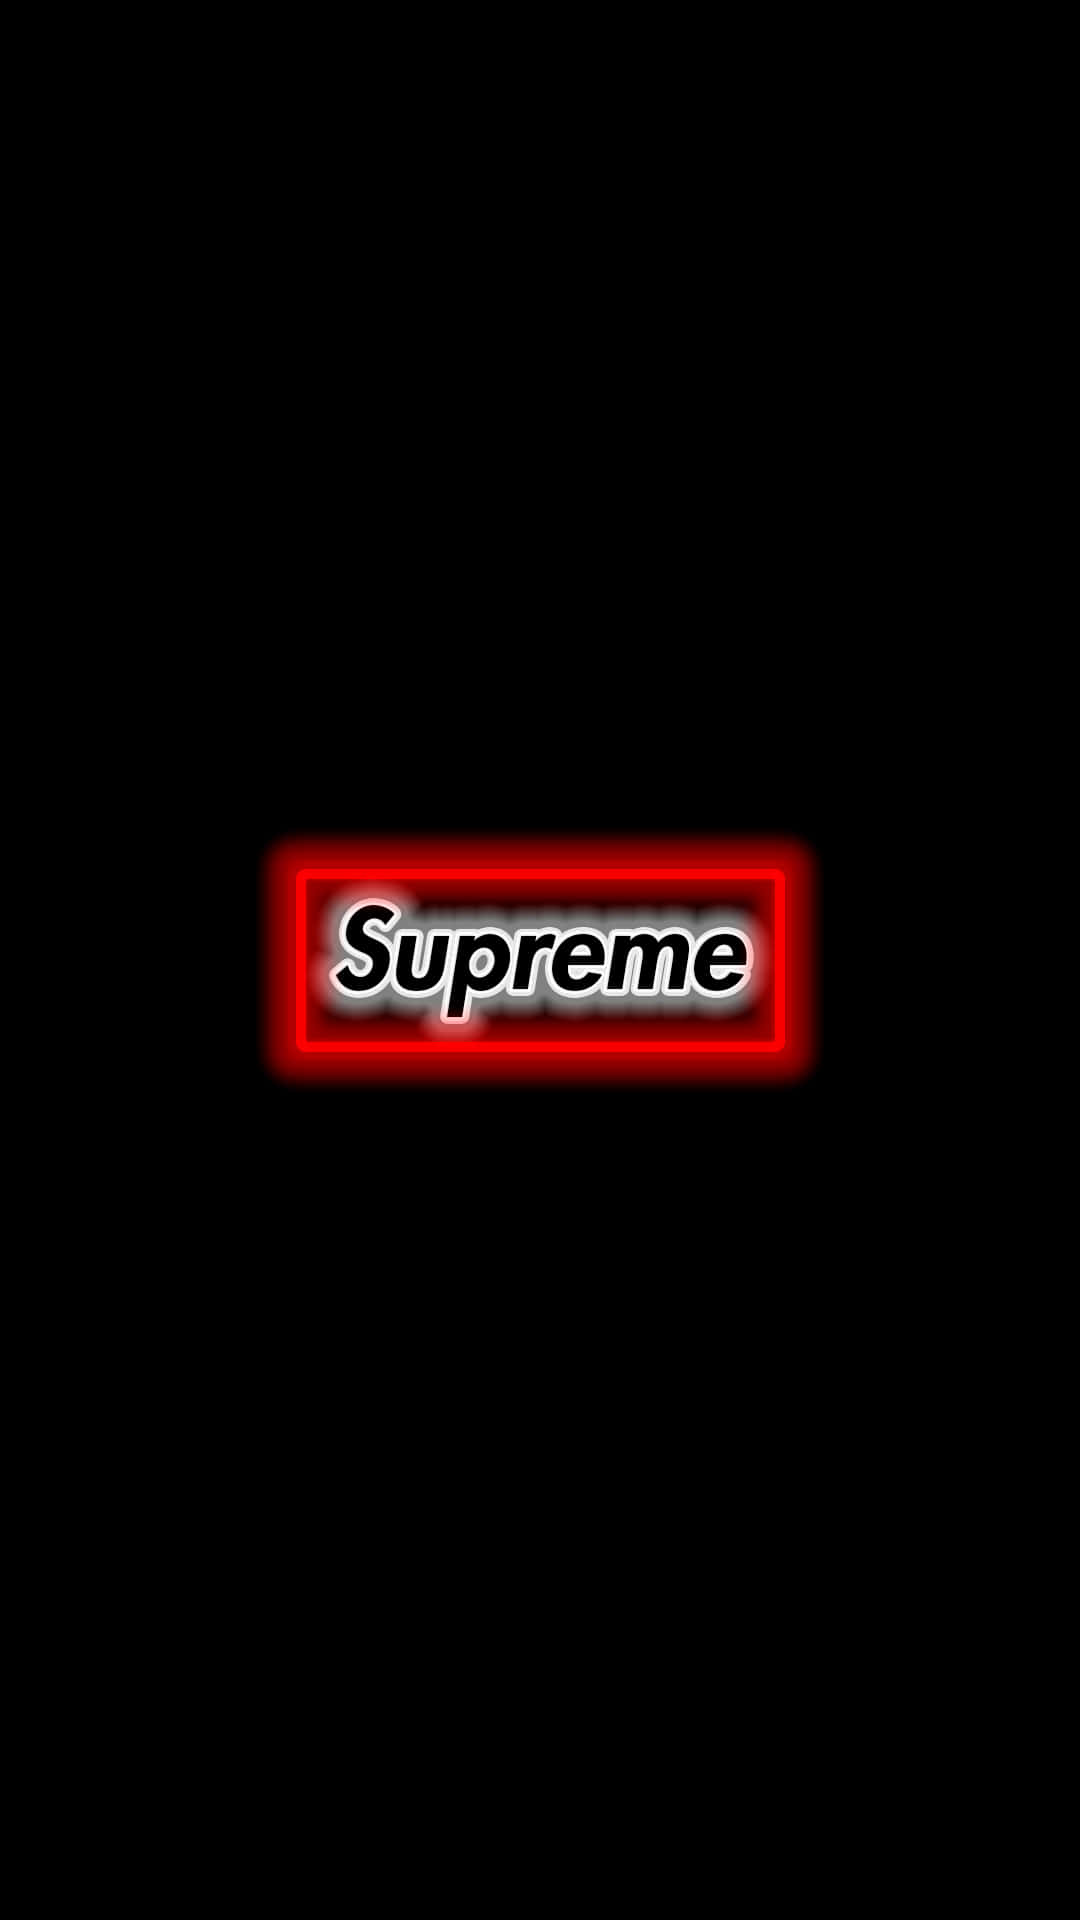 Supreme logo wallpaper by jonasvaldez06 - Download on ZEDGE™